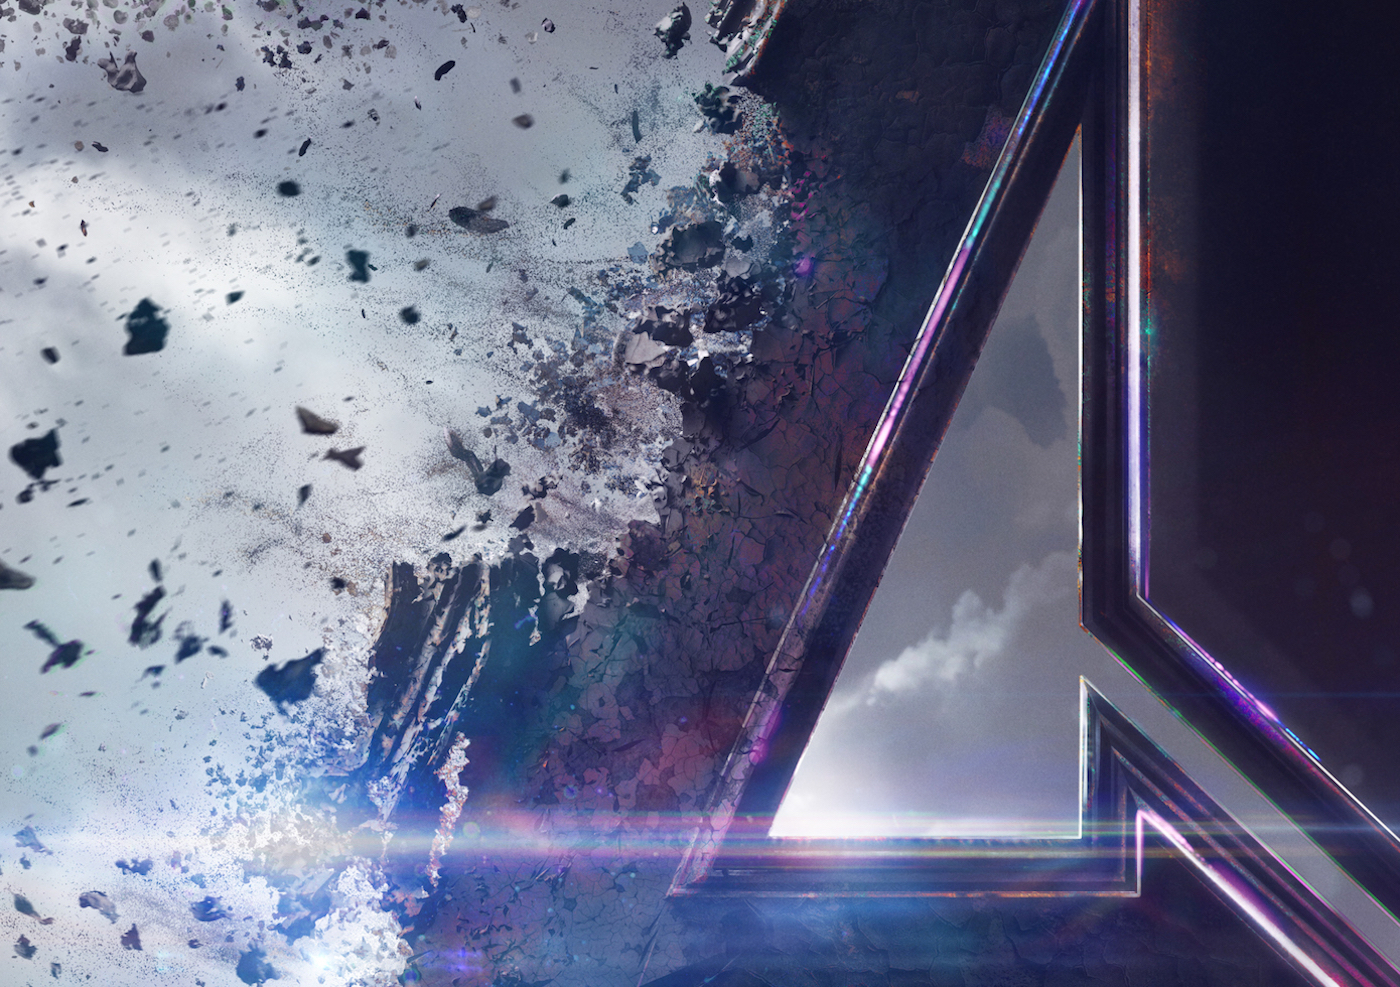 Avengers: Endgame Poster Reveals Surprise Release Date 